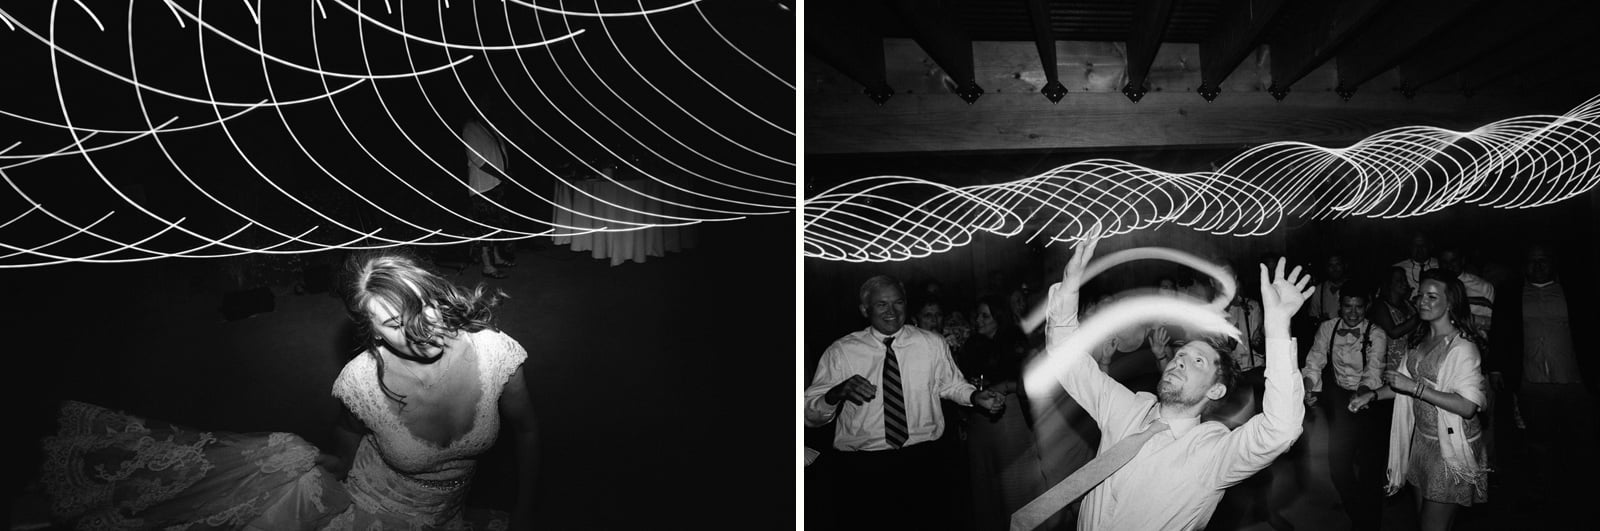 055-wedding-reception-dancing-light-streak-photos-black-and-white.jpg